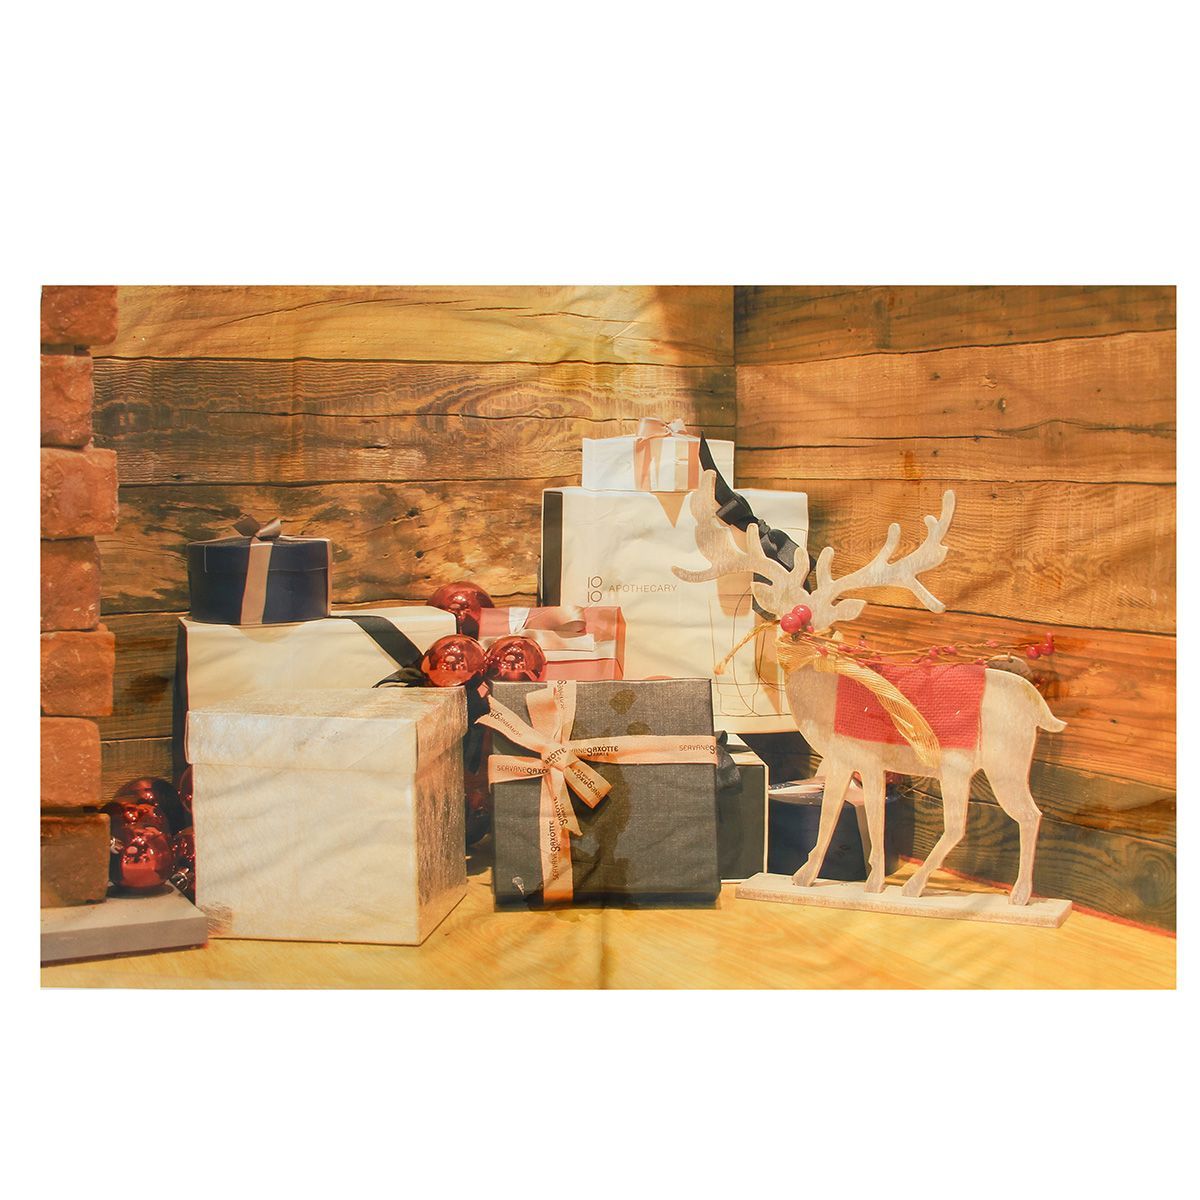 7x5ft-Christmas-Wooden-Elk-Christmas-Gift-Photography-Backdrop-Studio-Prop-Background-1348826